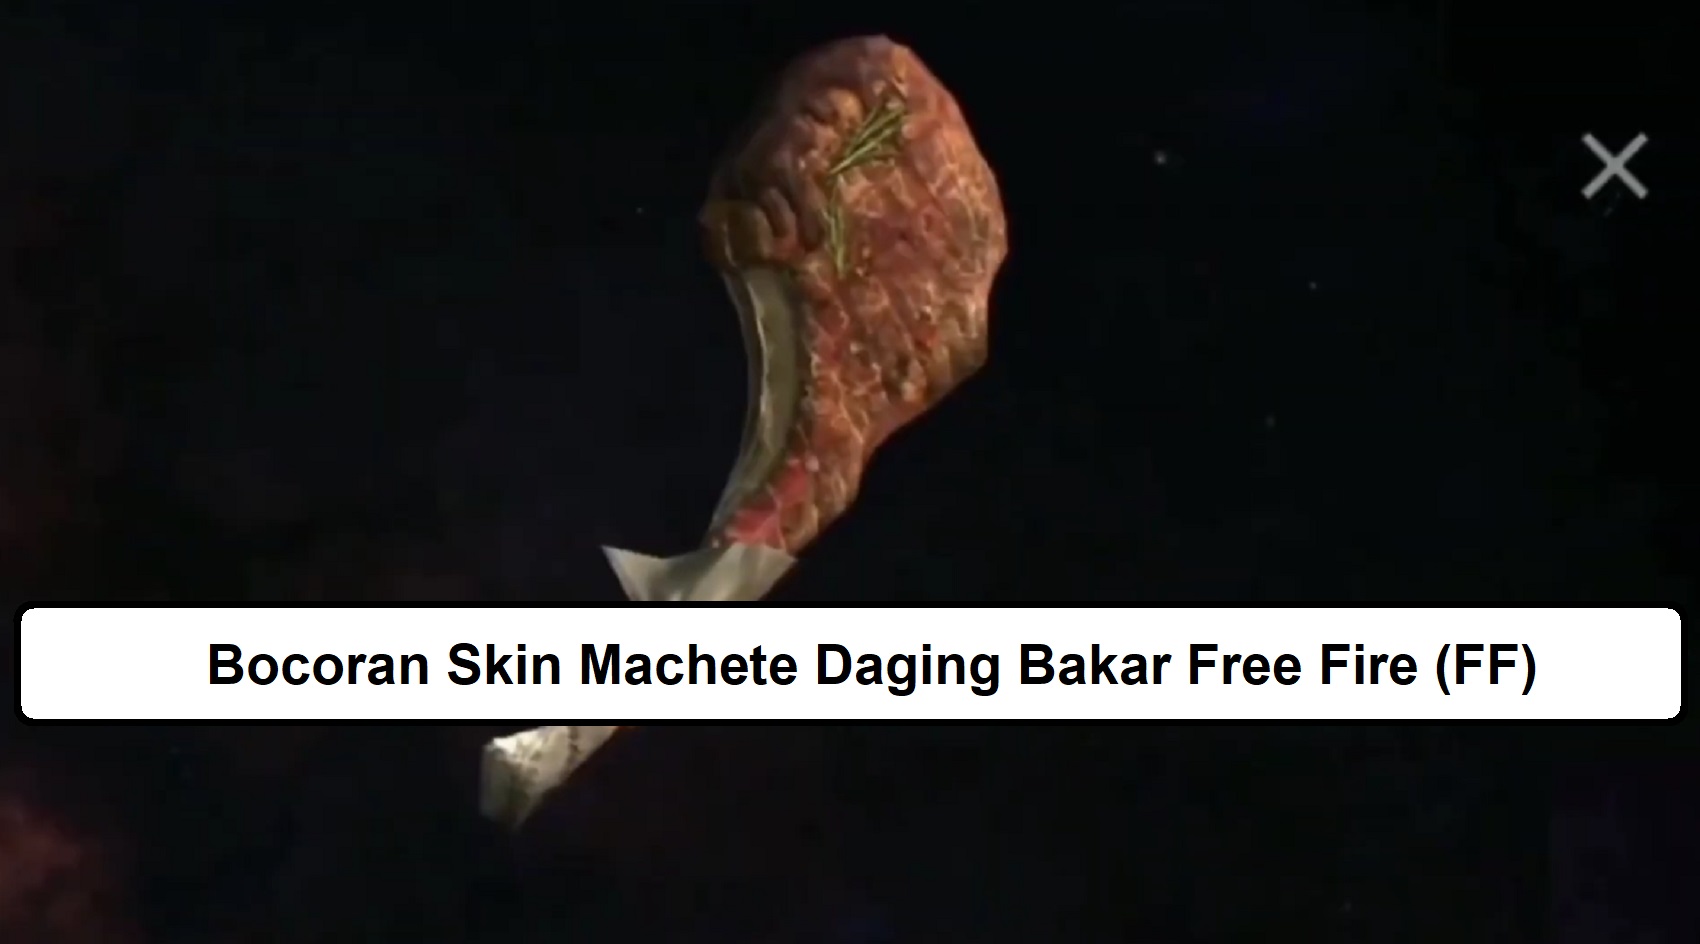 Bocoran Skin Machete Daging Bakar Free Fire (FF)